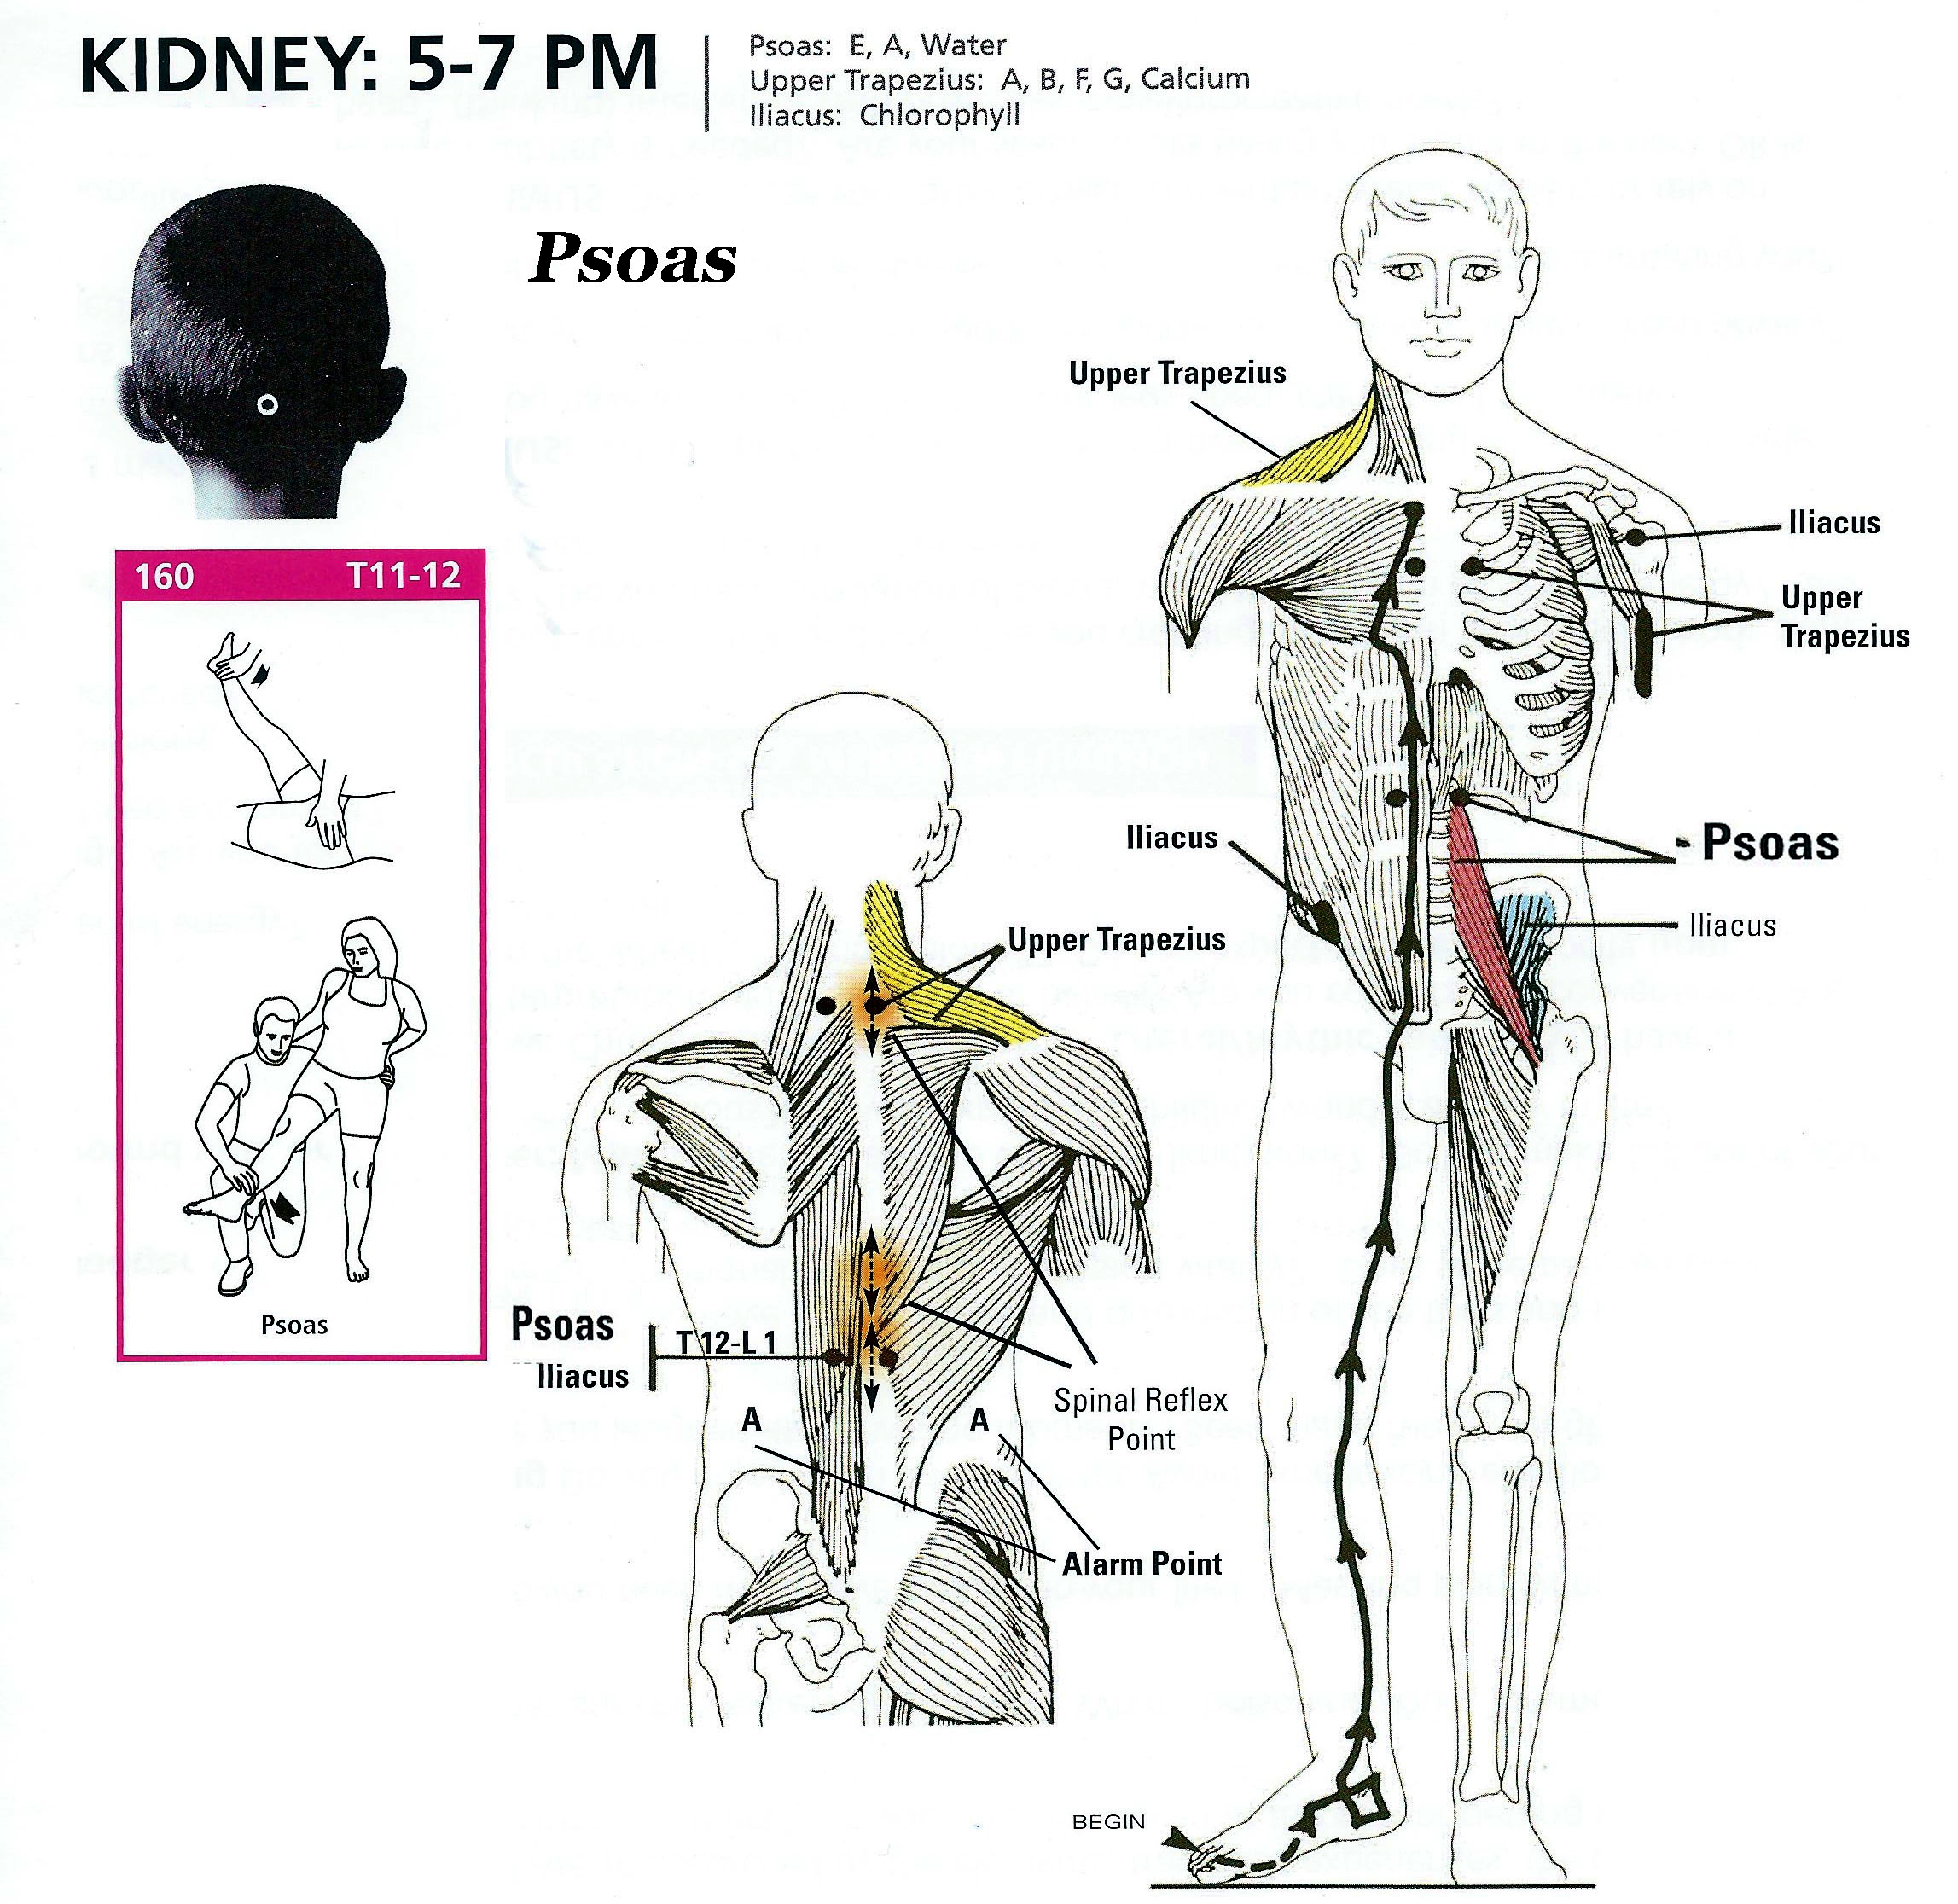 Kidney 5-7 PM.jpg